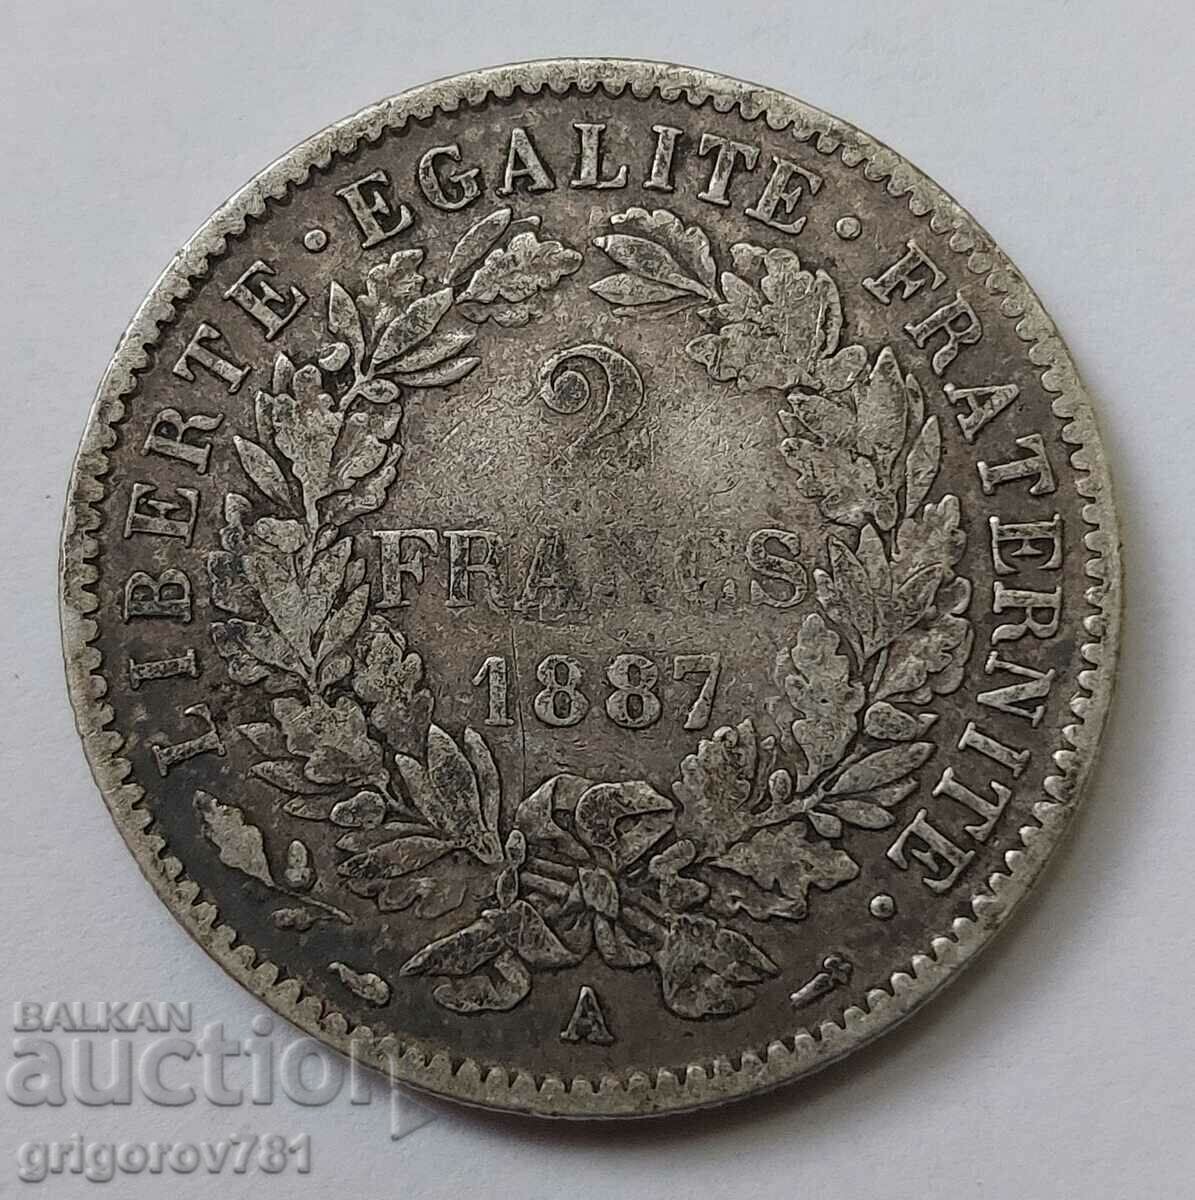 2 Francs Silver France 1887 A - Silver Coin #154